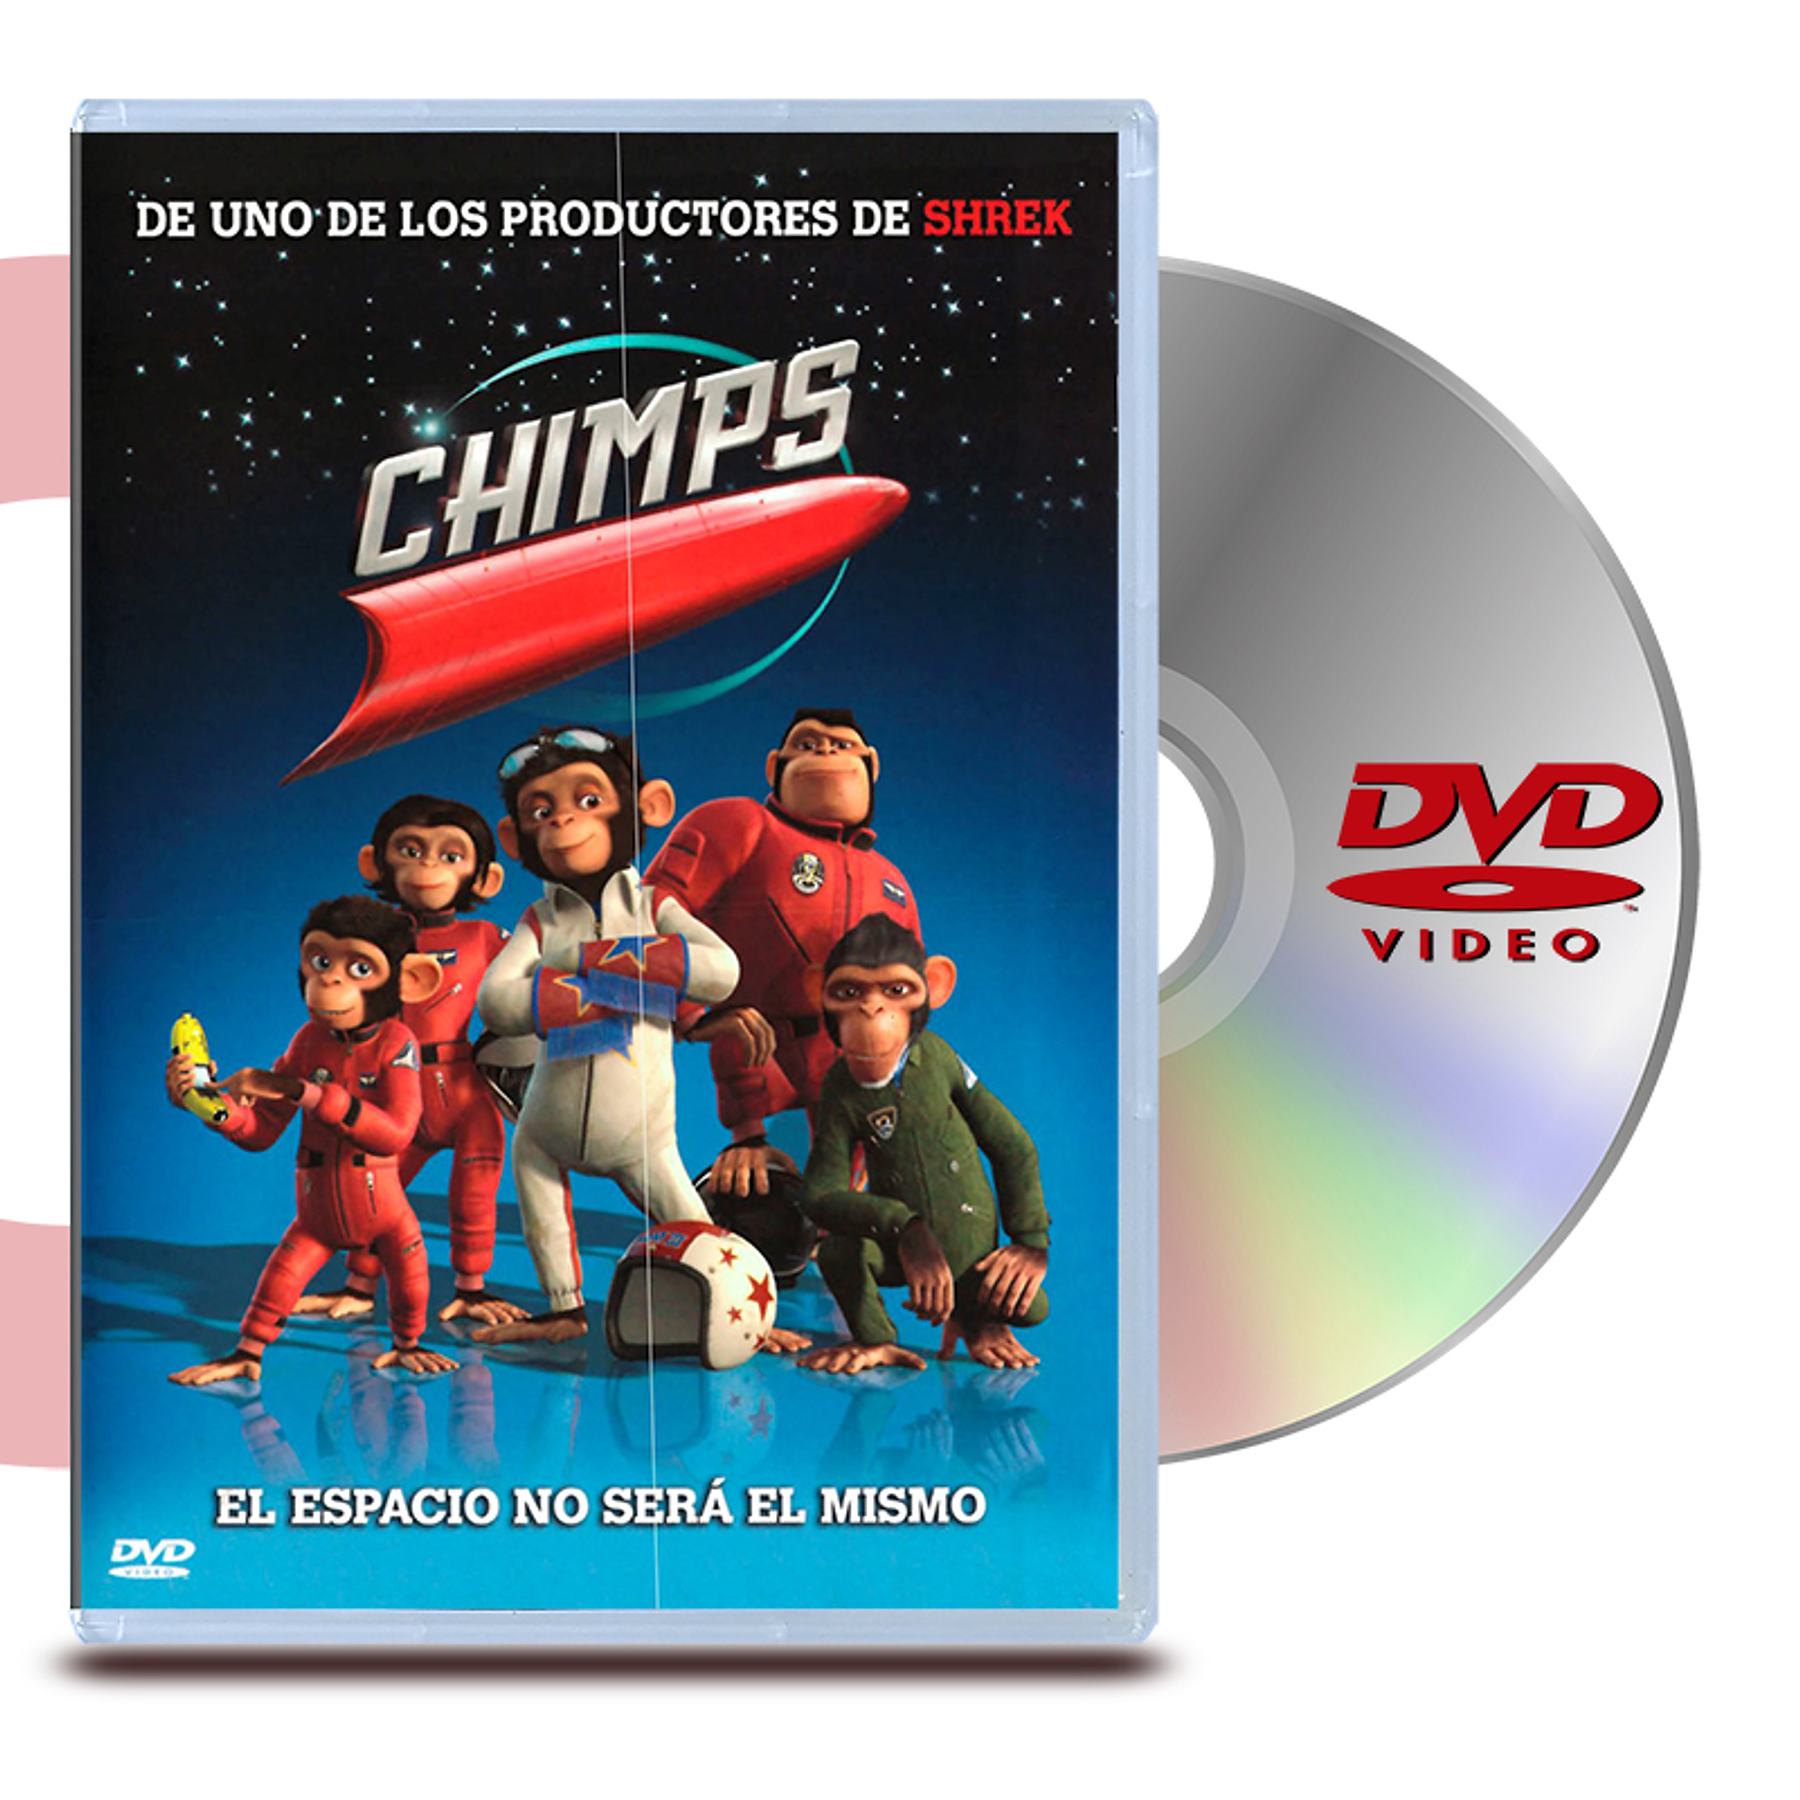 DVD CHIMPS